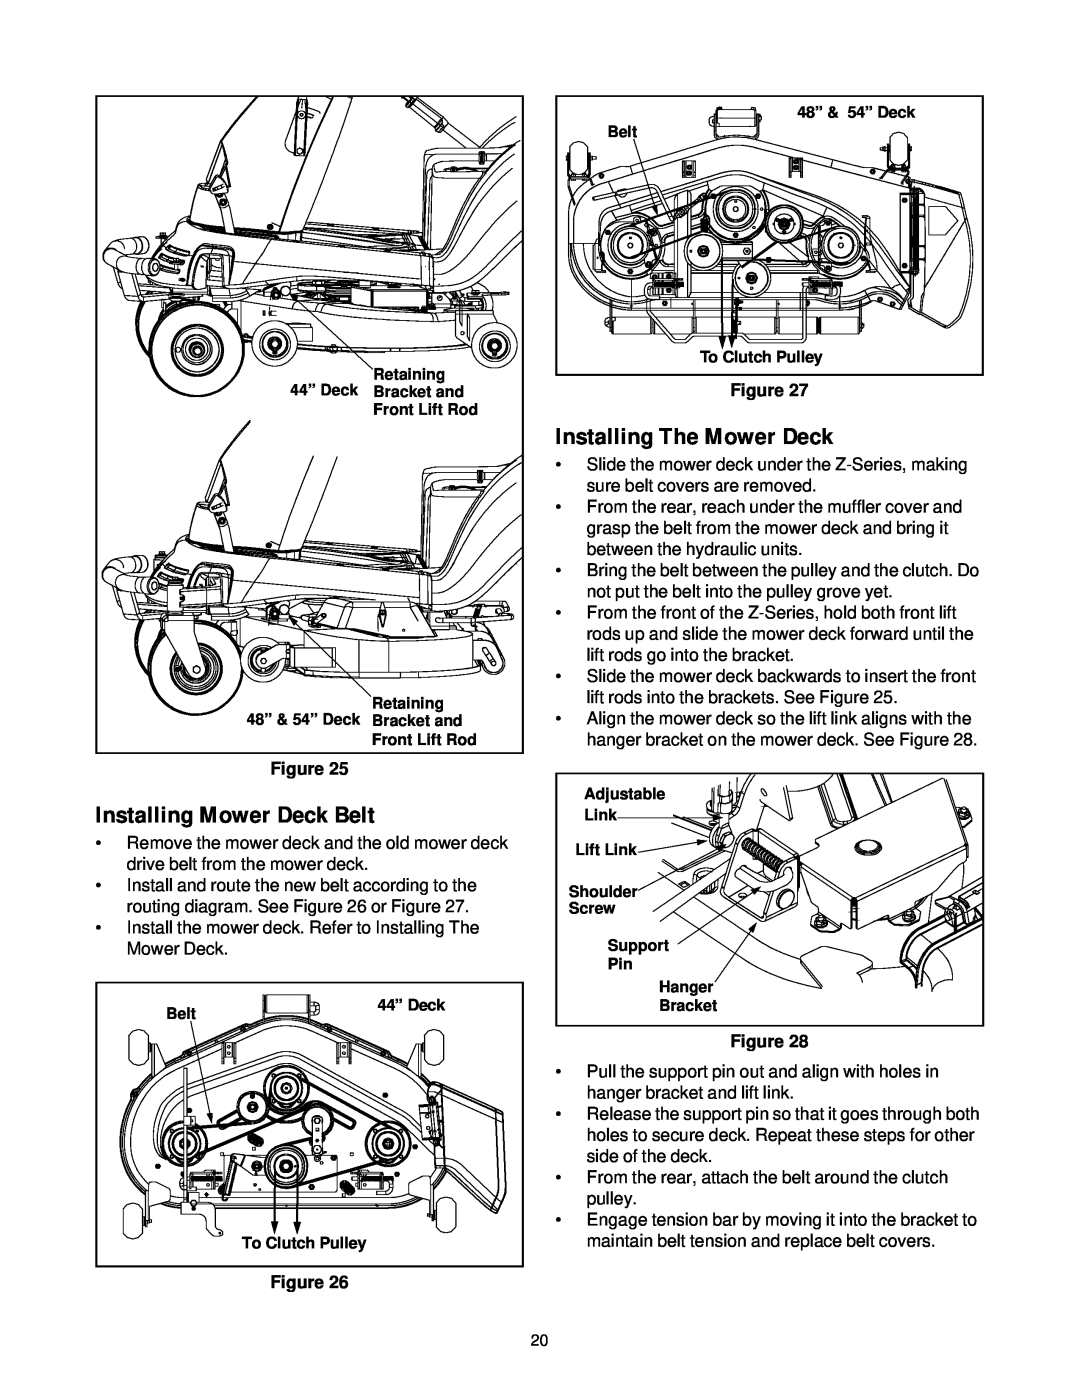 White Outdoor ZT-1850, ZT-2150, ZT-2250 manual Installing The Mower Deck, Installing Mower Deck Belt, Figure 